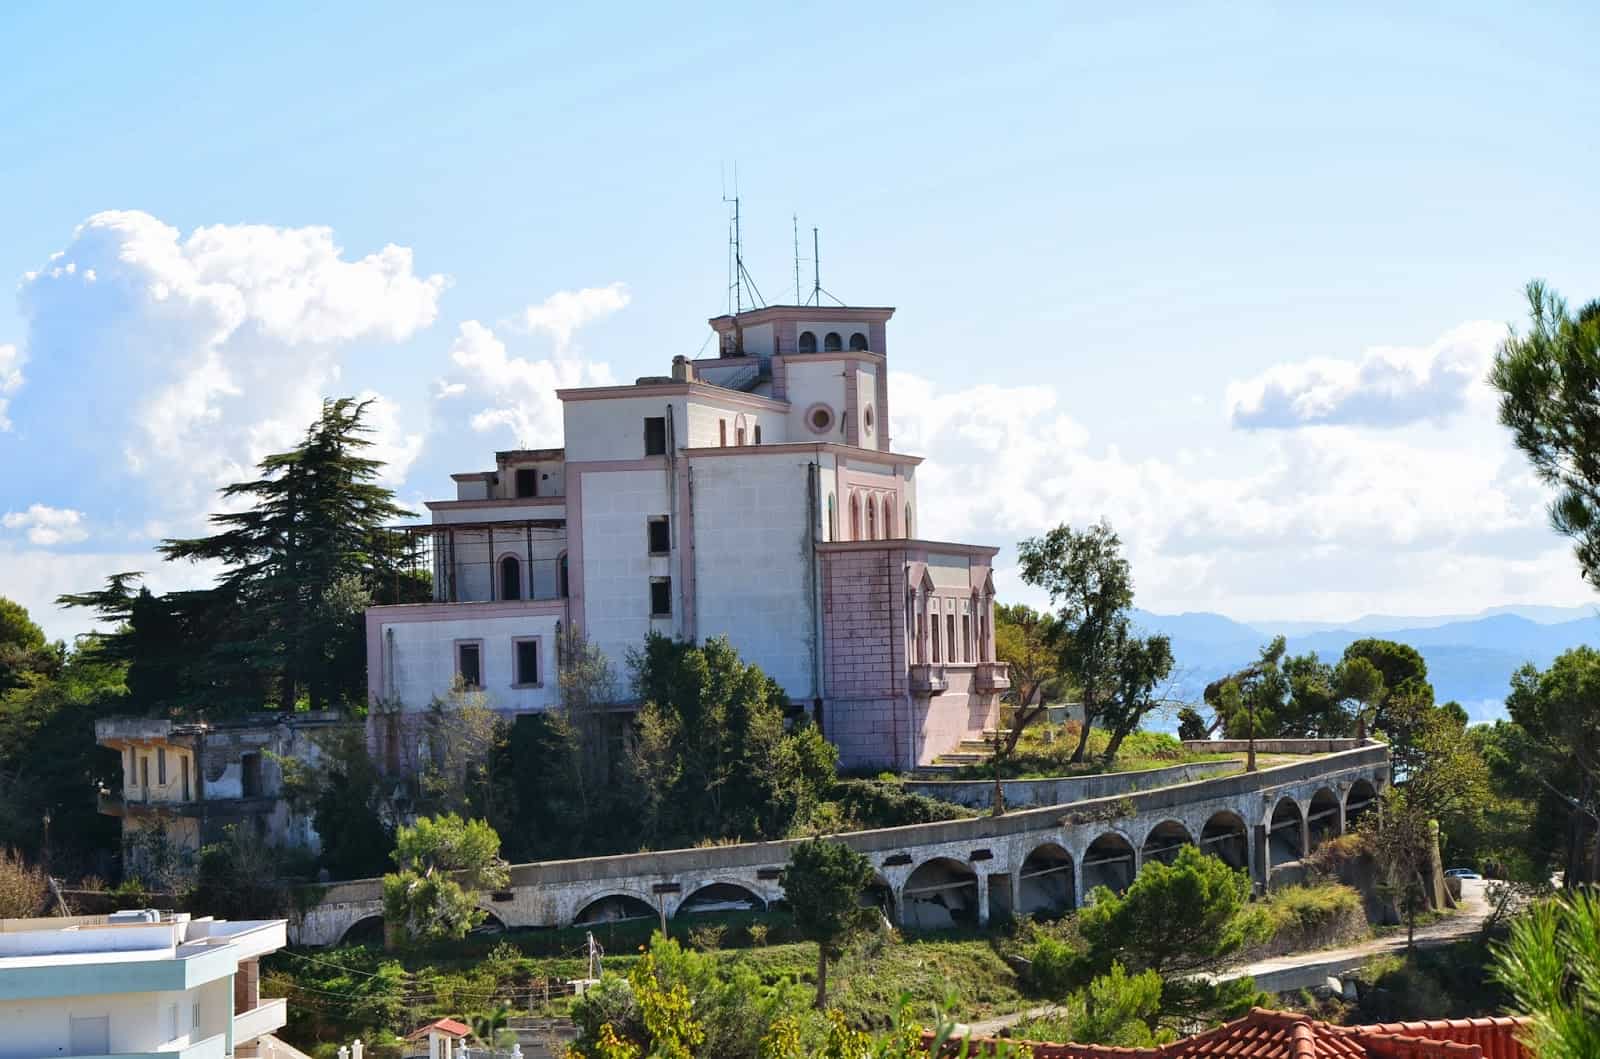 Villa of King Zog in Durrës, Albania